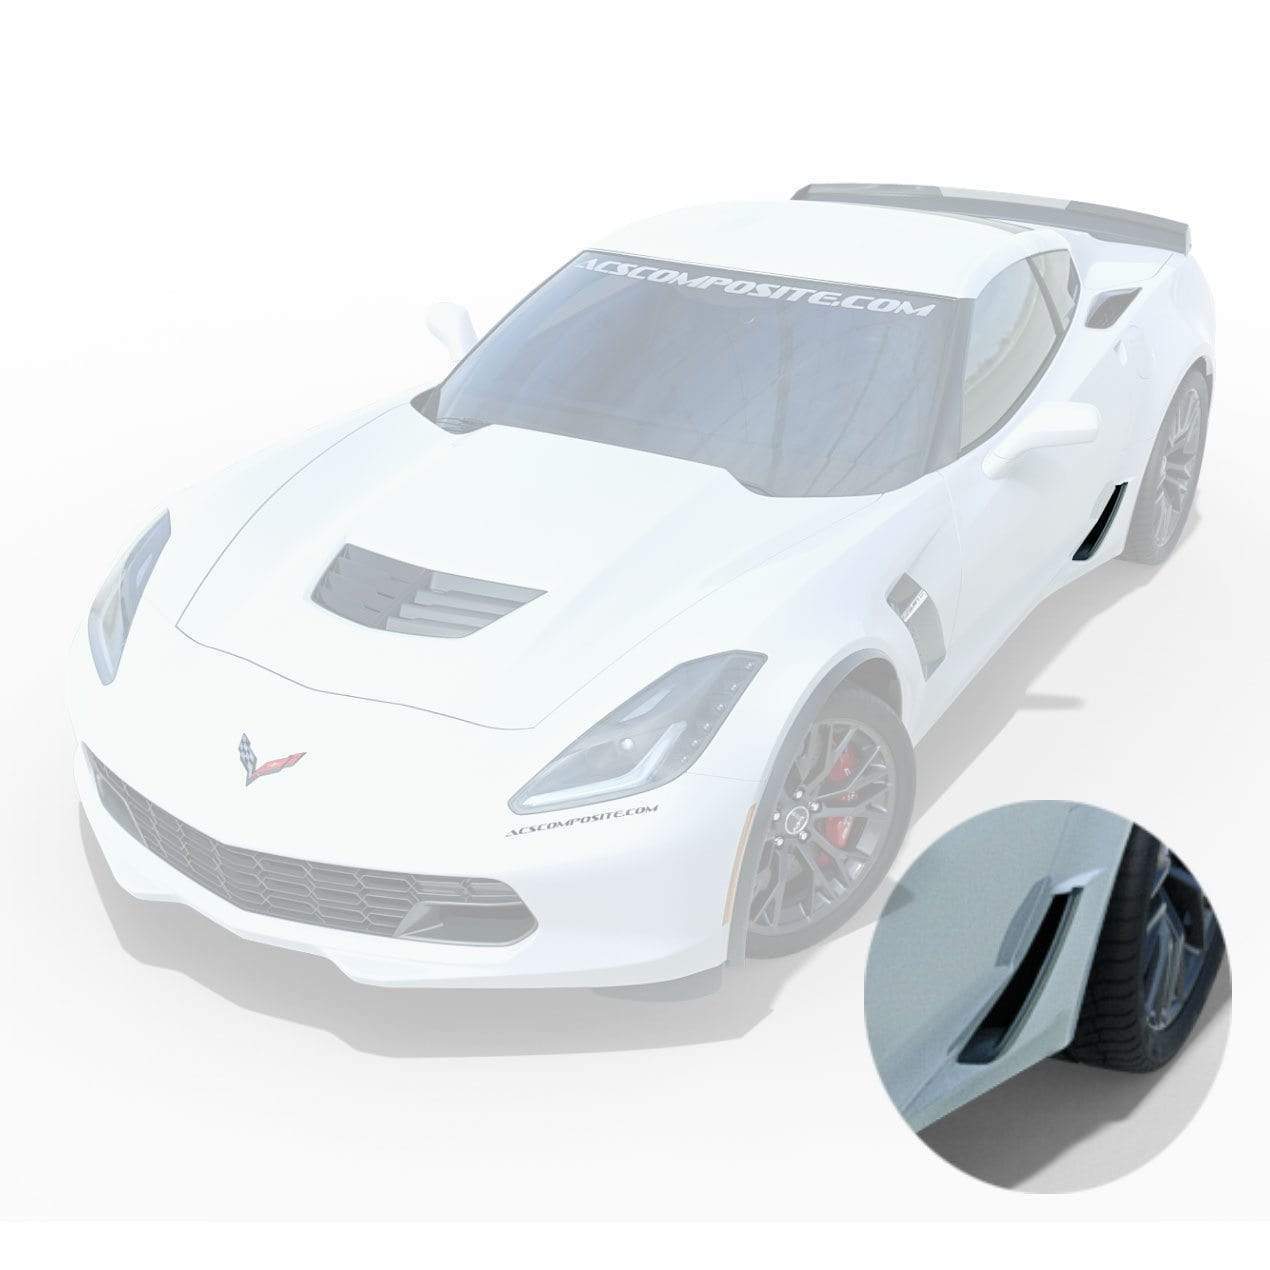 ACS Composite XL Protection Pack for C7 Corvette ZR1, Z06, & Grand Sport in Carbon Flash Black [SKU: 45-4-191|45-4-193|45-4-177|45-4-106]CFZ